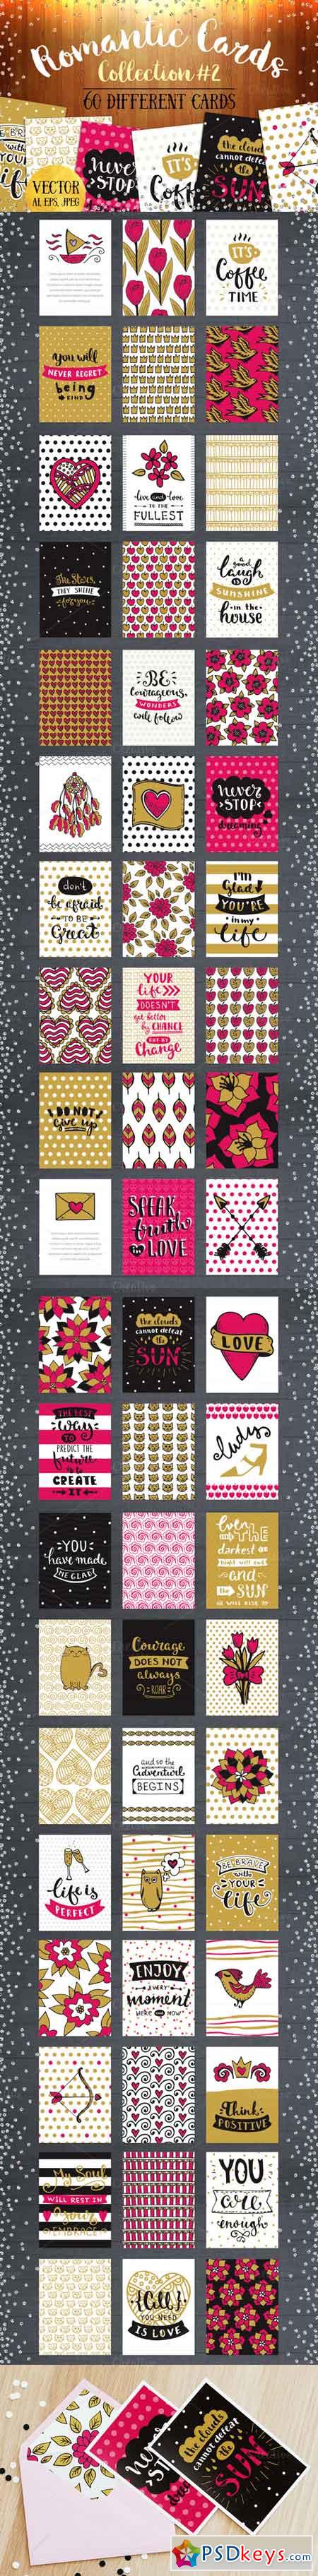 60 Romantic Wedding Cards Set #2 645329